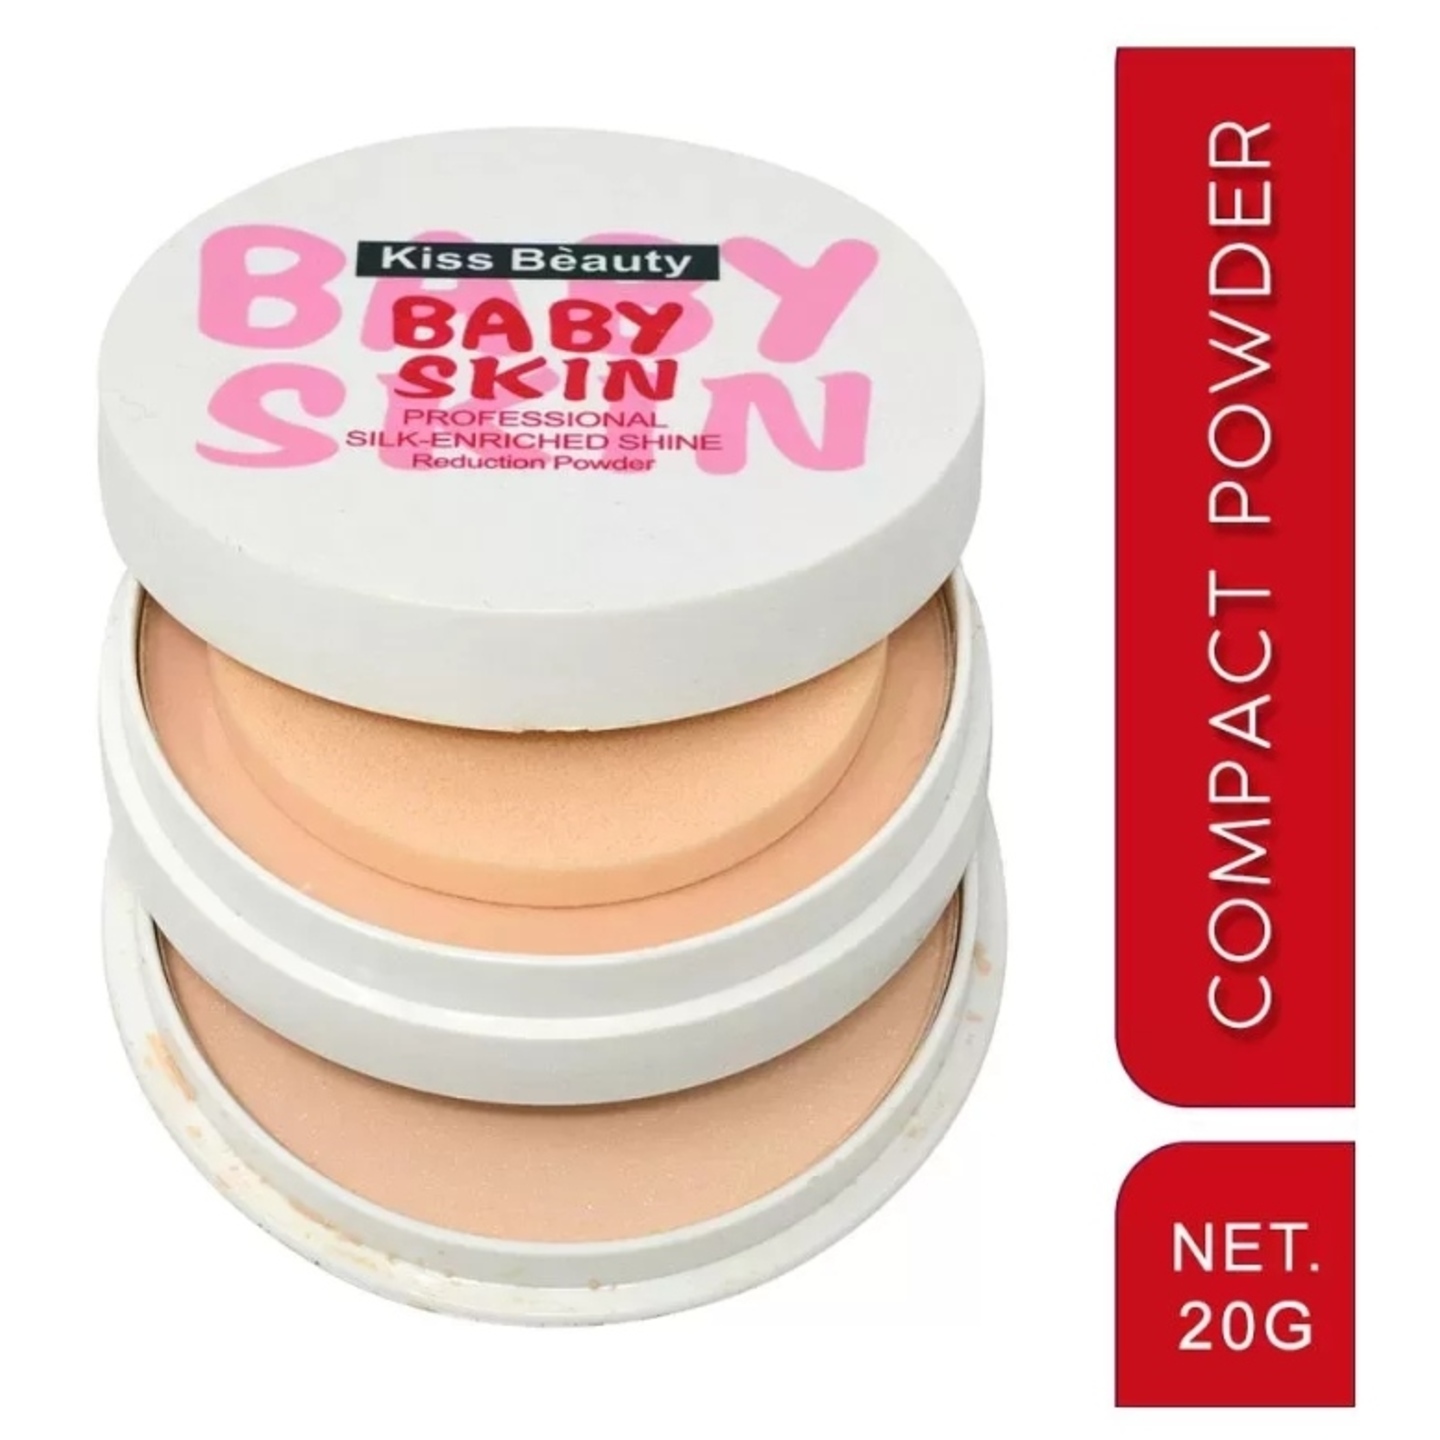 Kiss Beauty Baby Skin Compact Powder. 